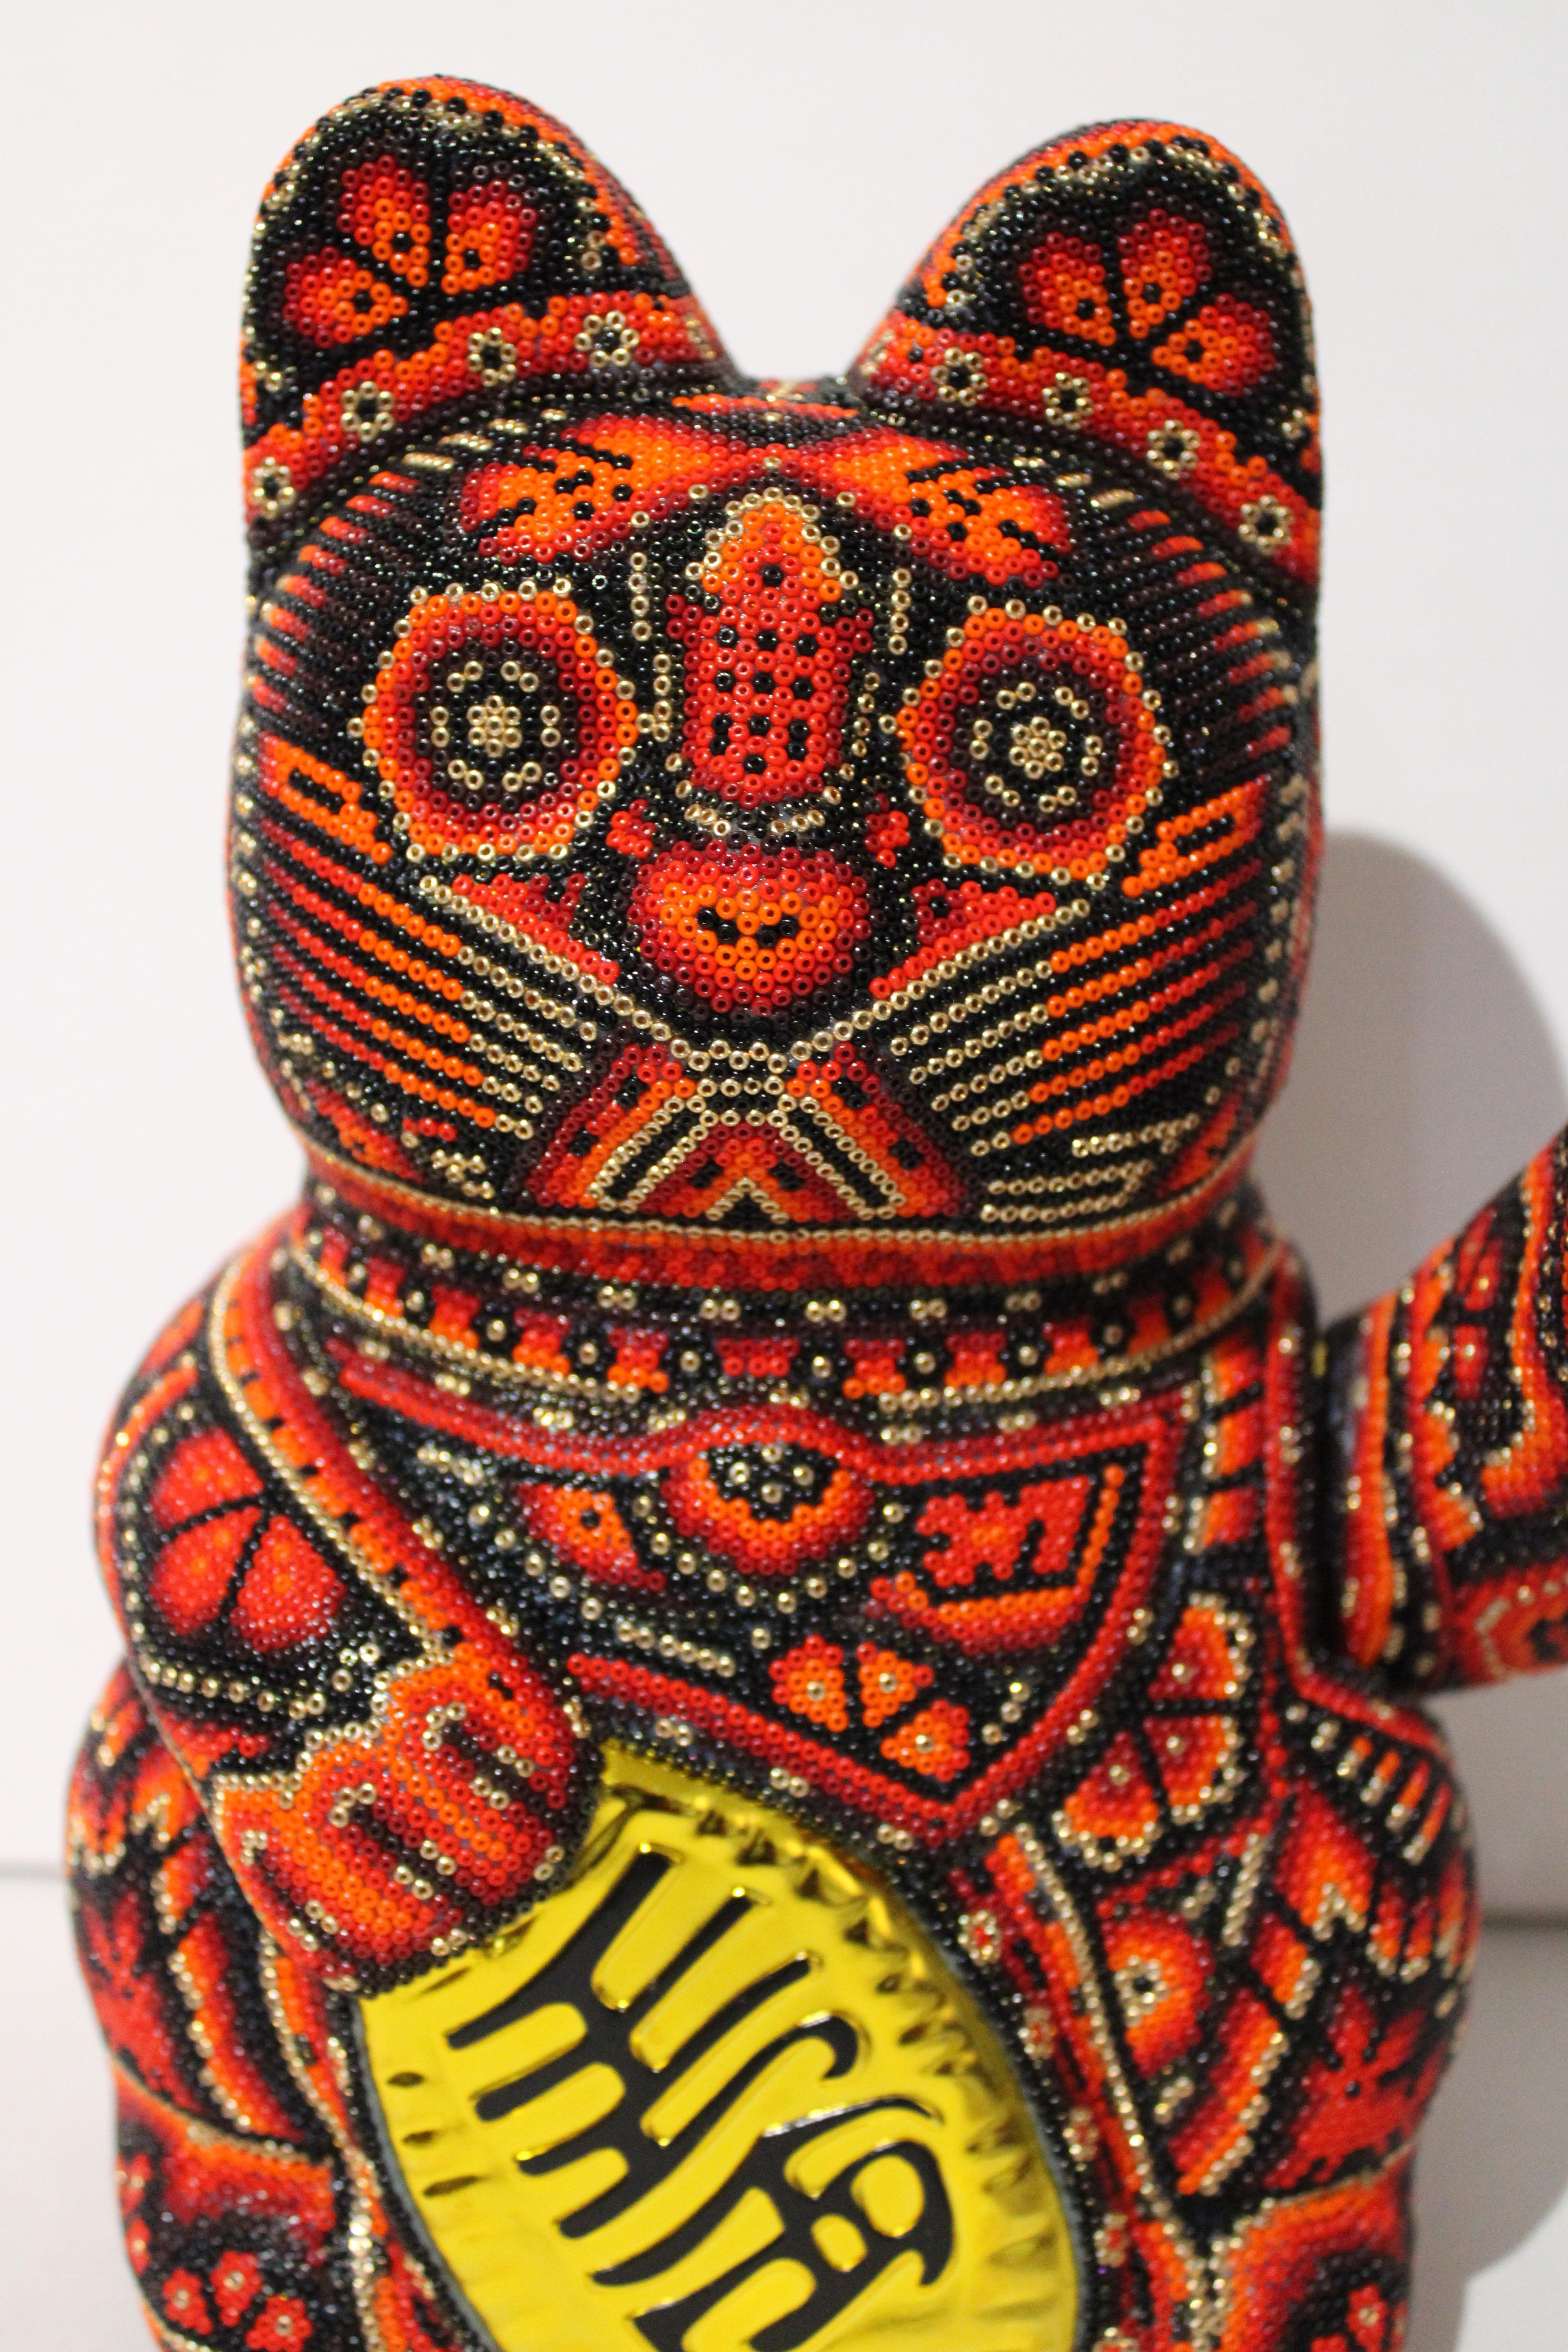 Money Cat from Huichol ALTERATIONS Series - Pop Art Sculpture by CHROMA aka Rick Wolfryd 